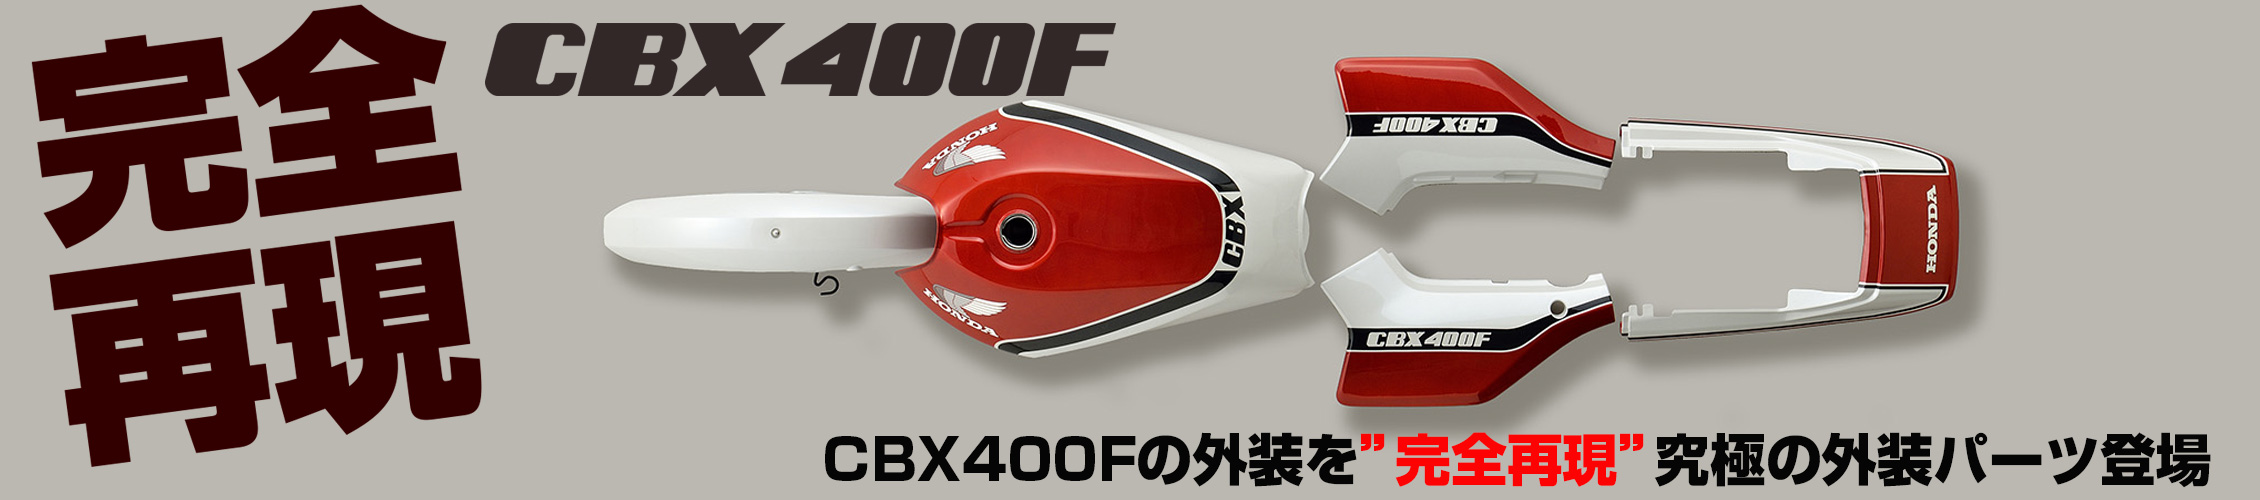 CBX400F専門店 復刻パーツ・オリジナルパーツ販売 / パステルロード 